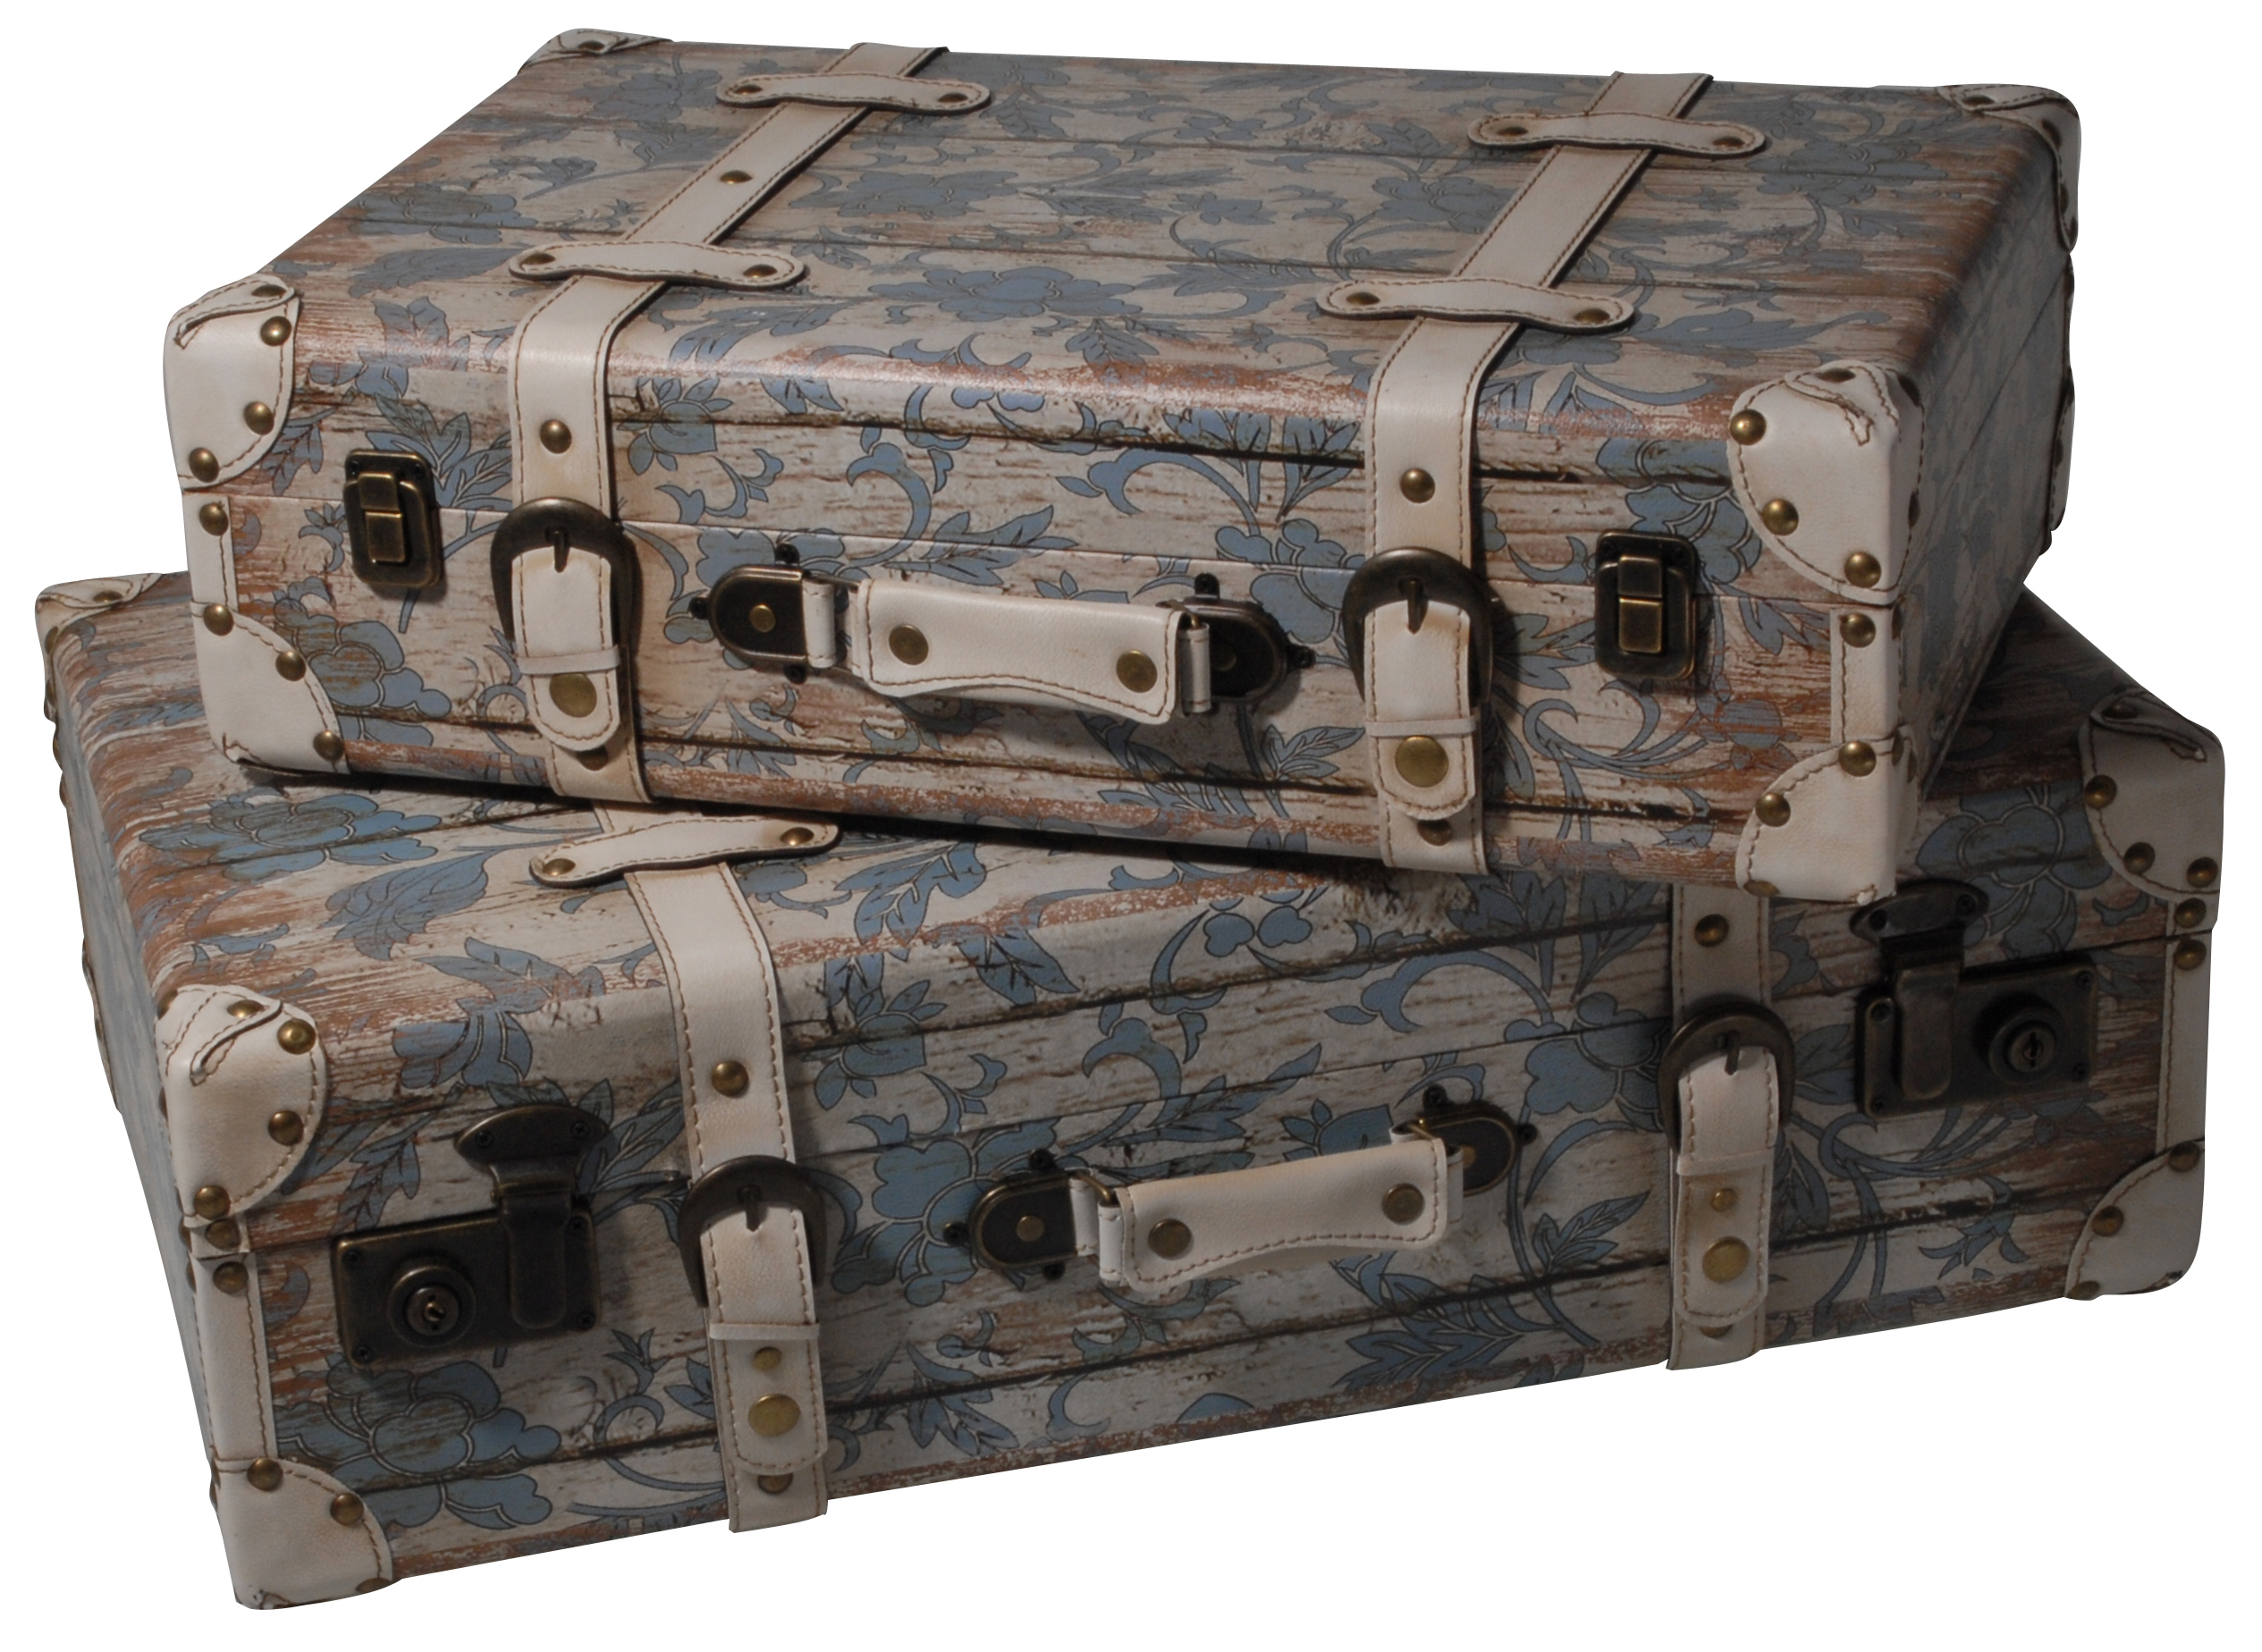 Antiqued Suitcase Shaped Trunk Set Of 2 - image 1 of 1